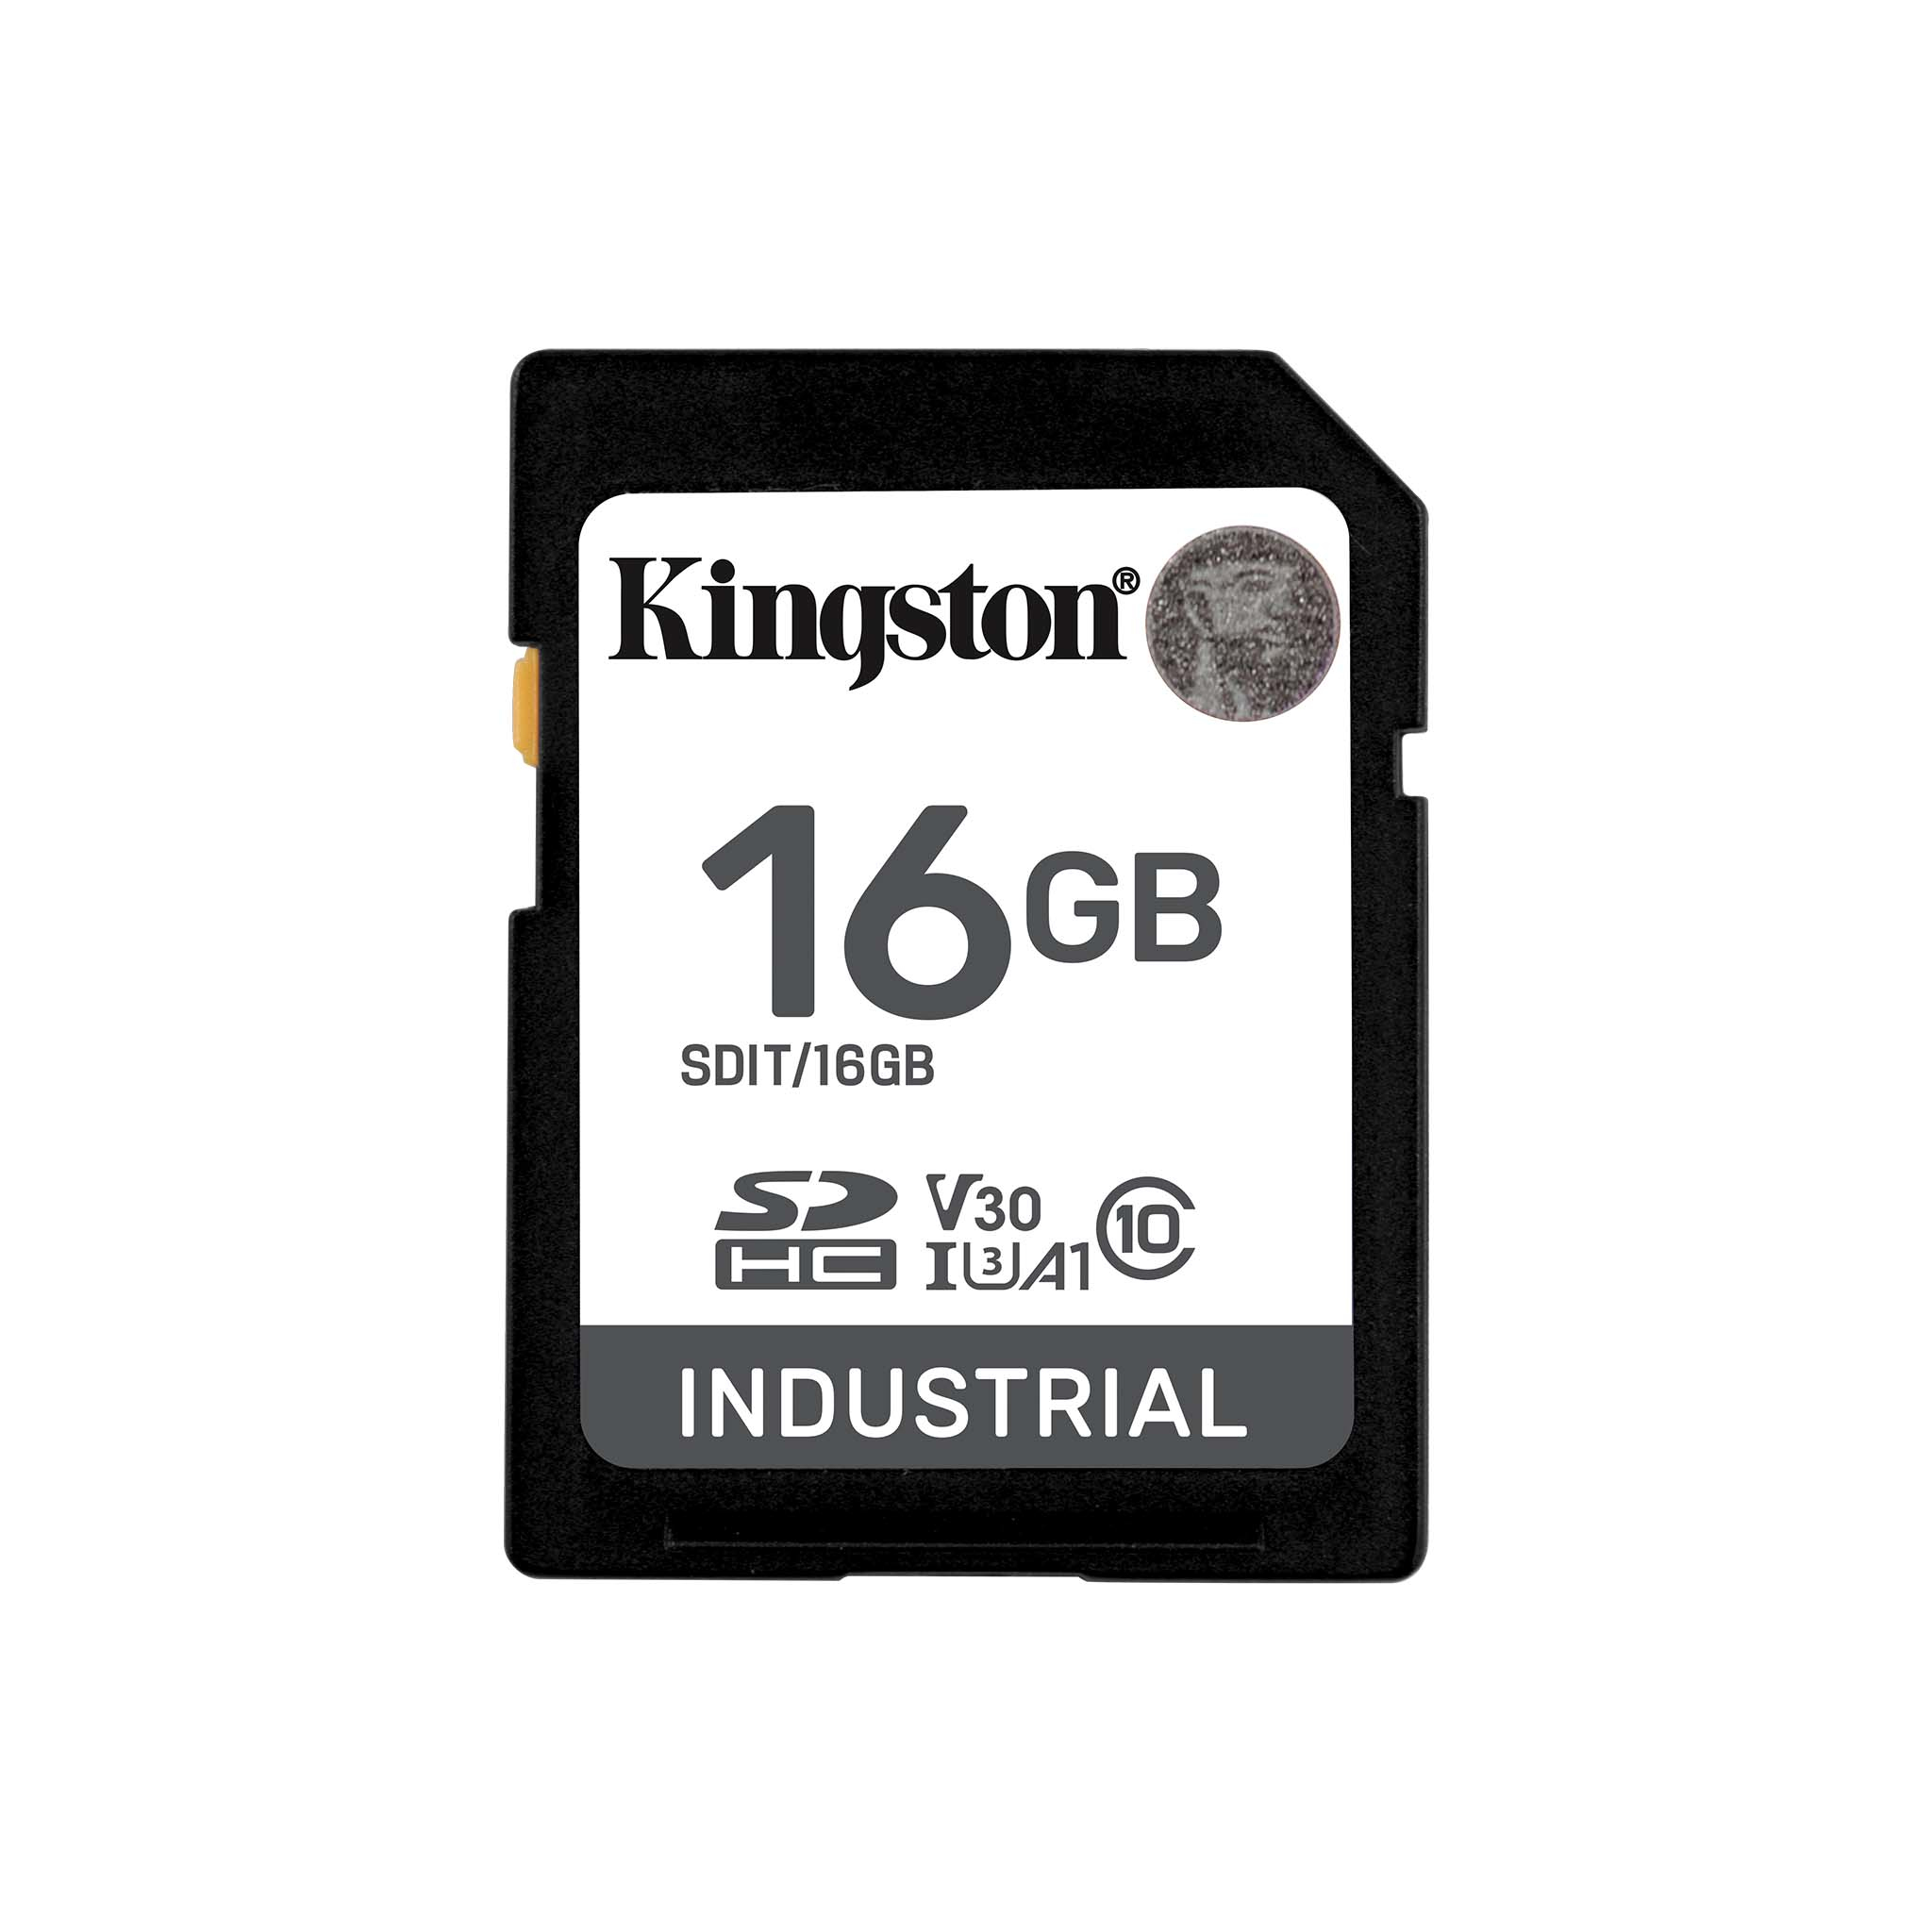 Kingston Technology SDIT/16GB